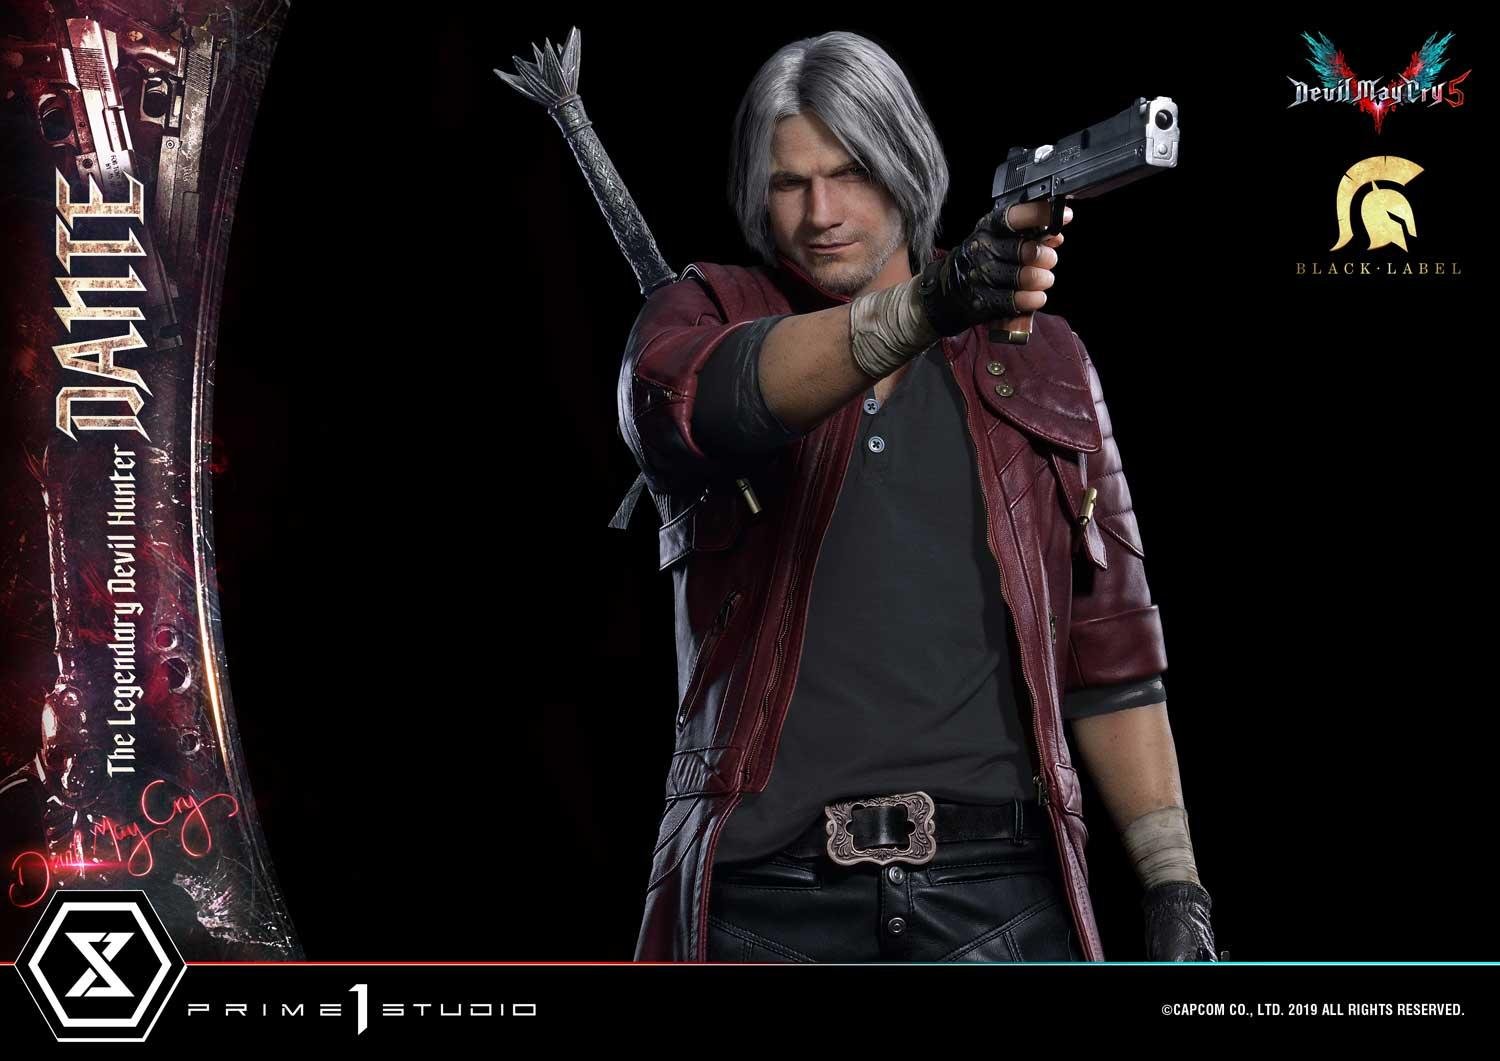 Devil May Cry: Prime 1 revela estatueta realista de Dante